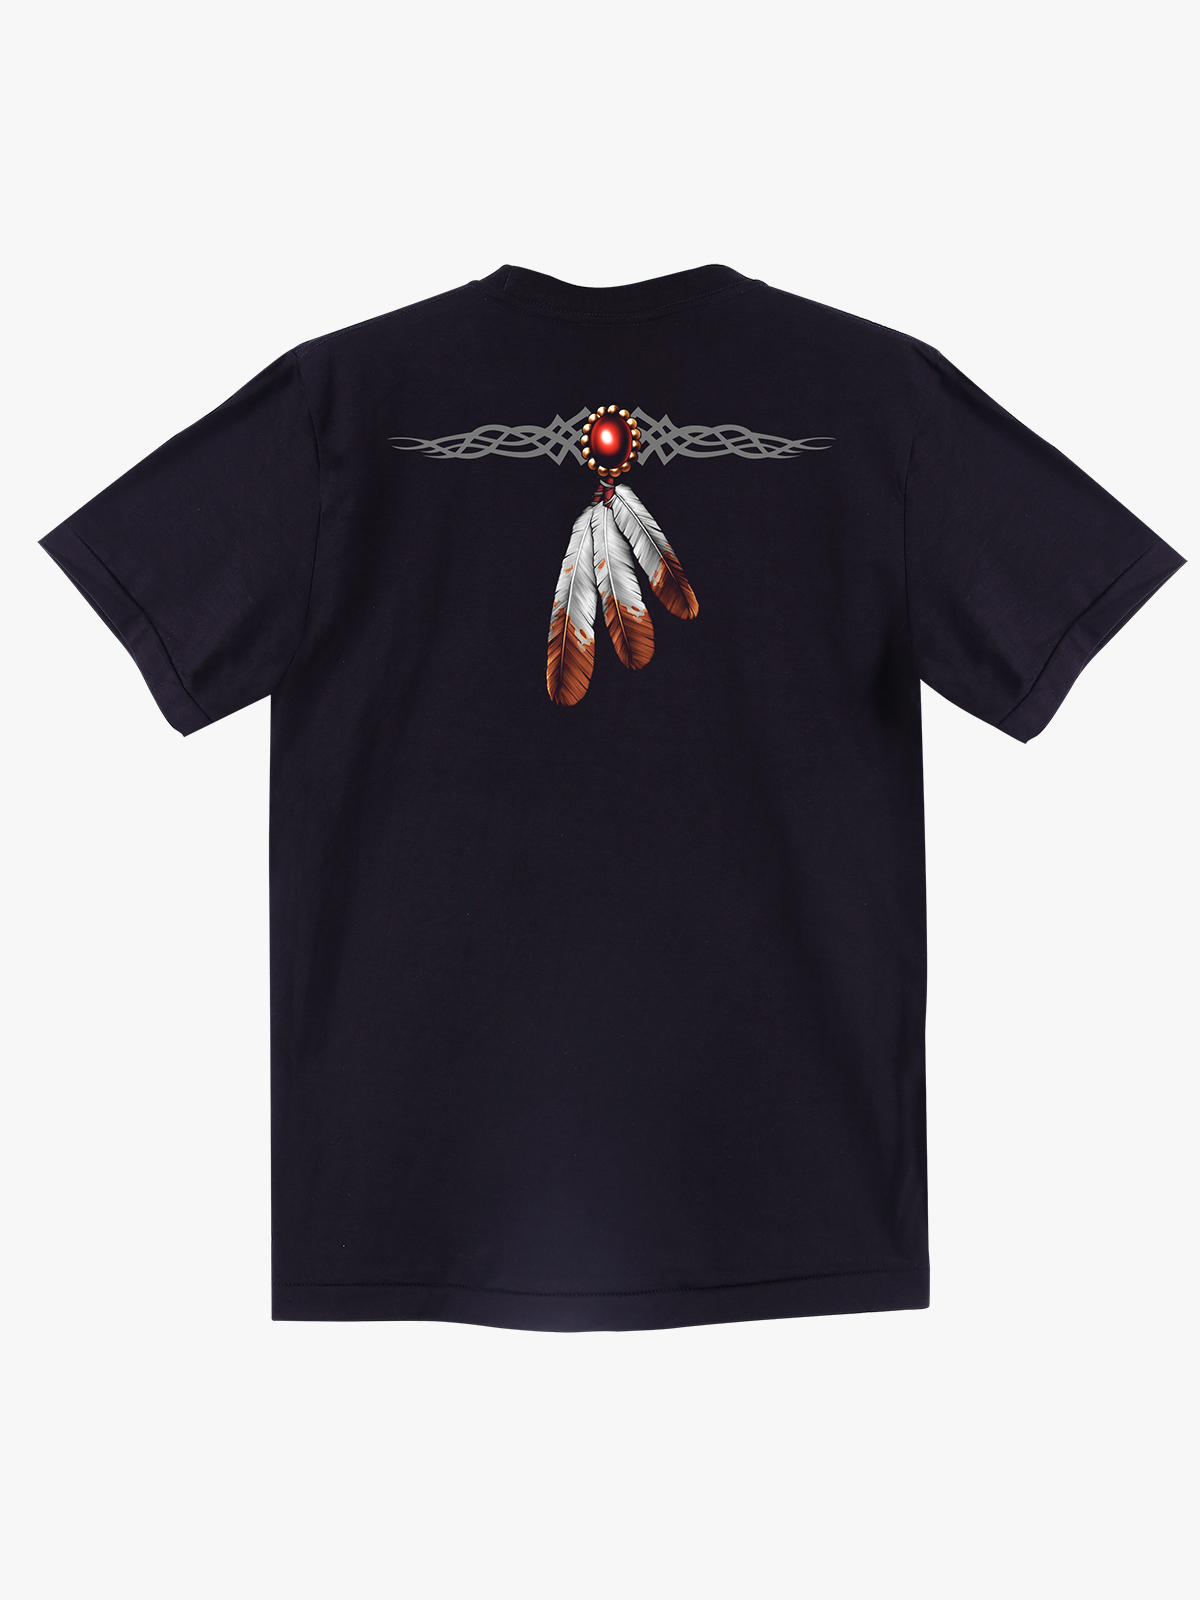 4157 – Rock Eagle T-Shirts – Official Site